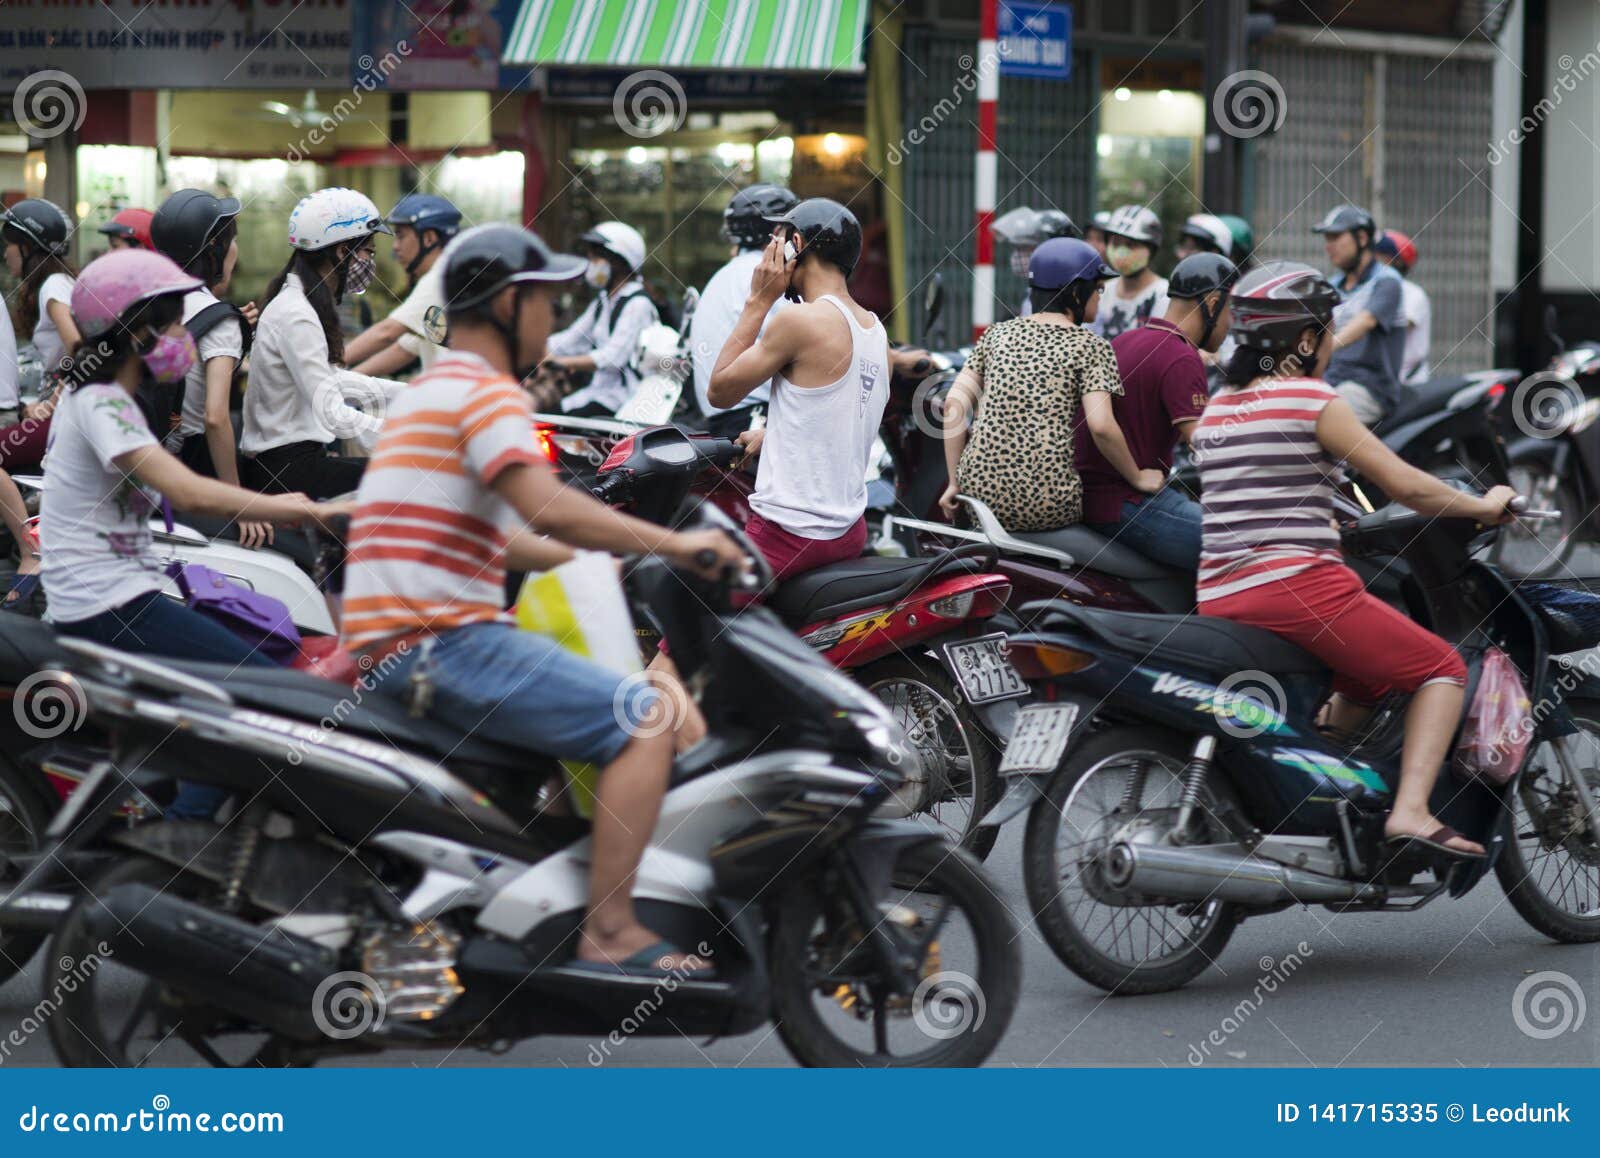 Motorbikes, Motorcycles and Scooters in Hanoi. Motorbike Traffic Jam ...